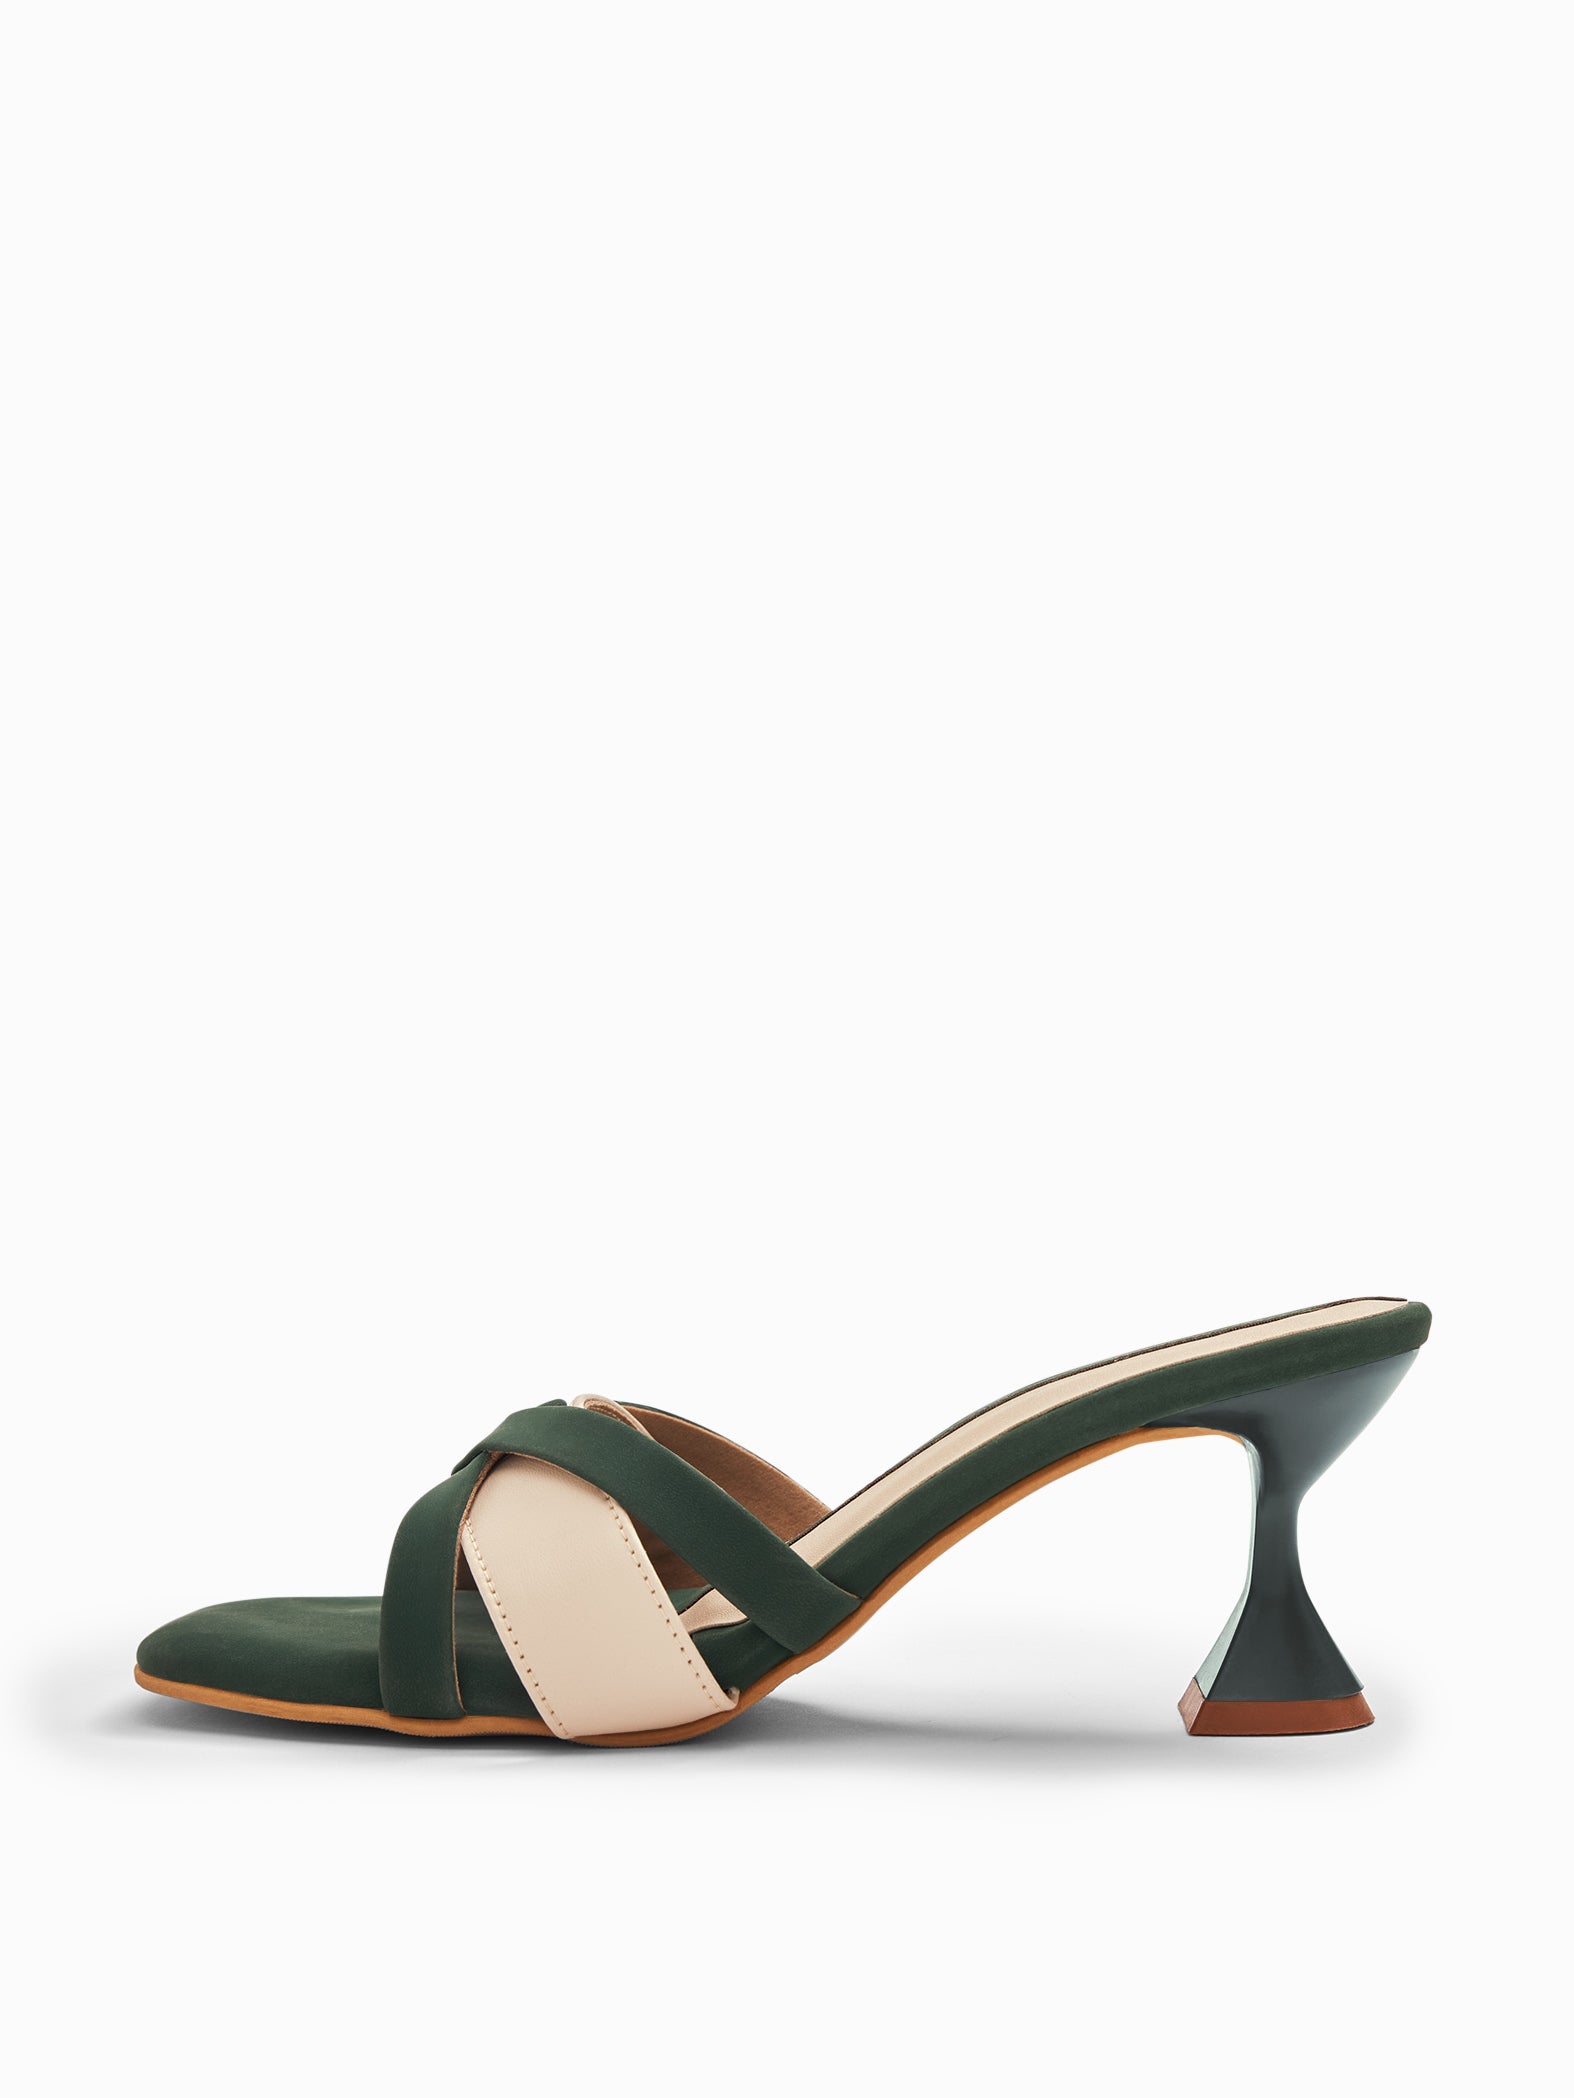 Emerald & Cream Spool Heels